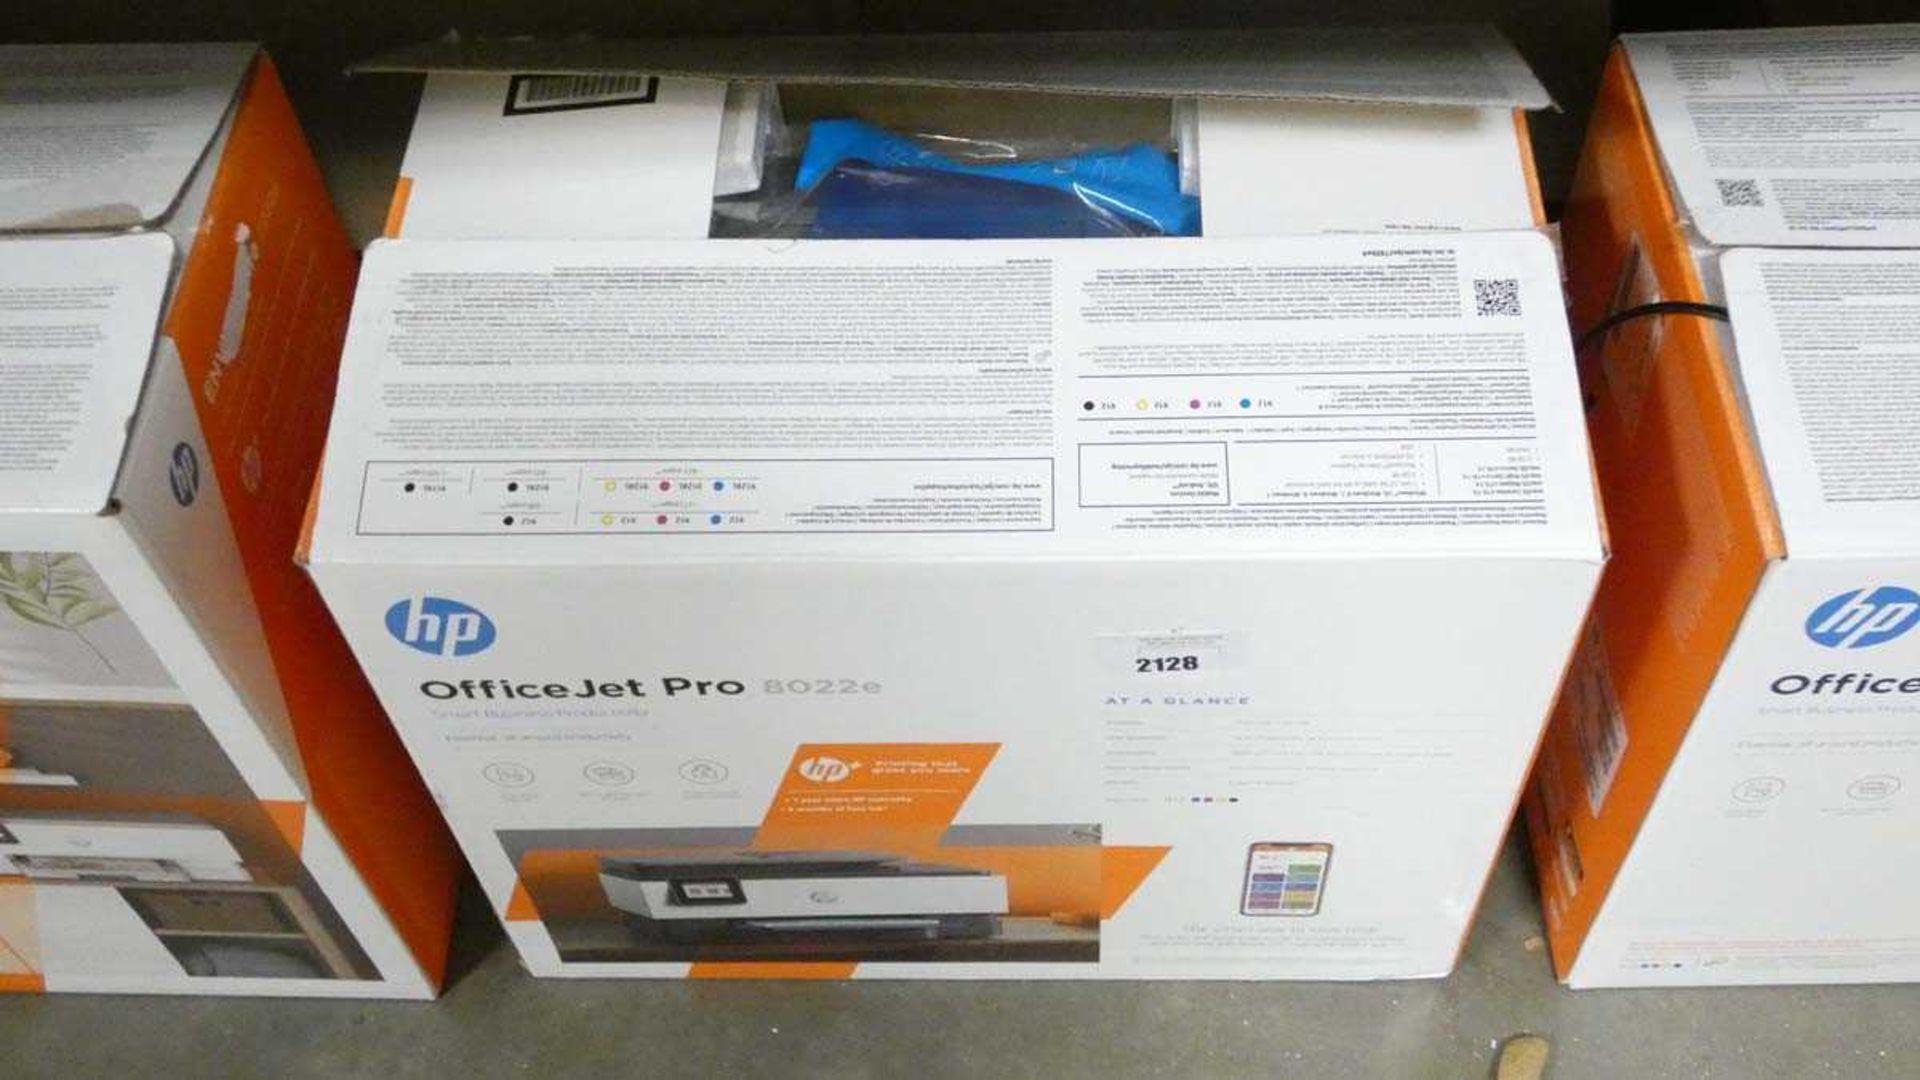 +VAT HP Office Jet Pro 8022E printer in box